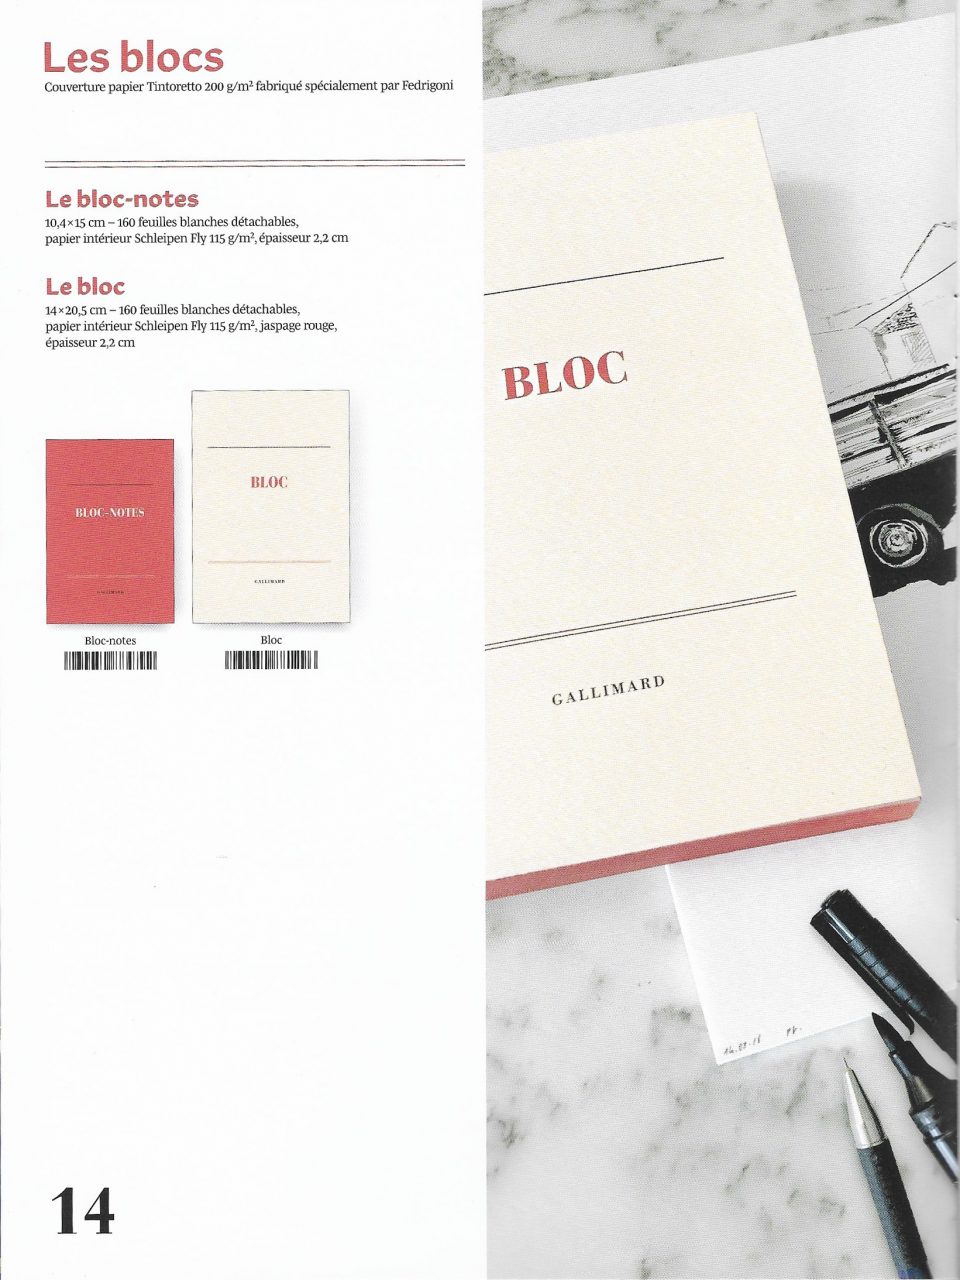 Catalogue des Editions Gallimard